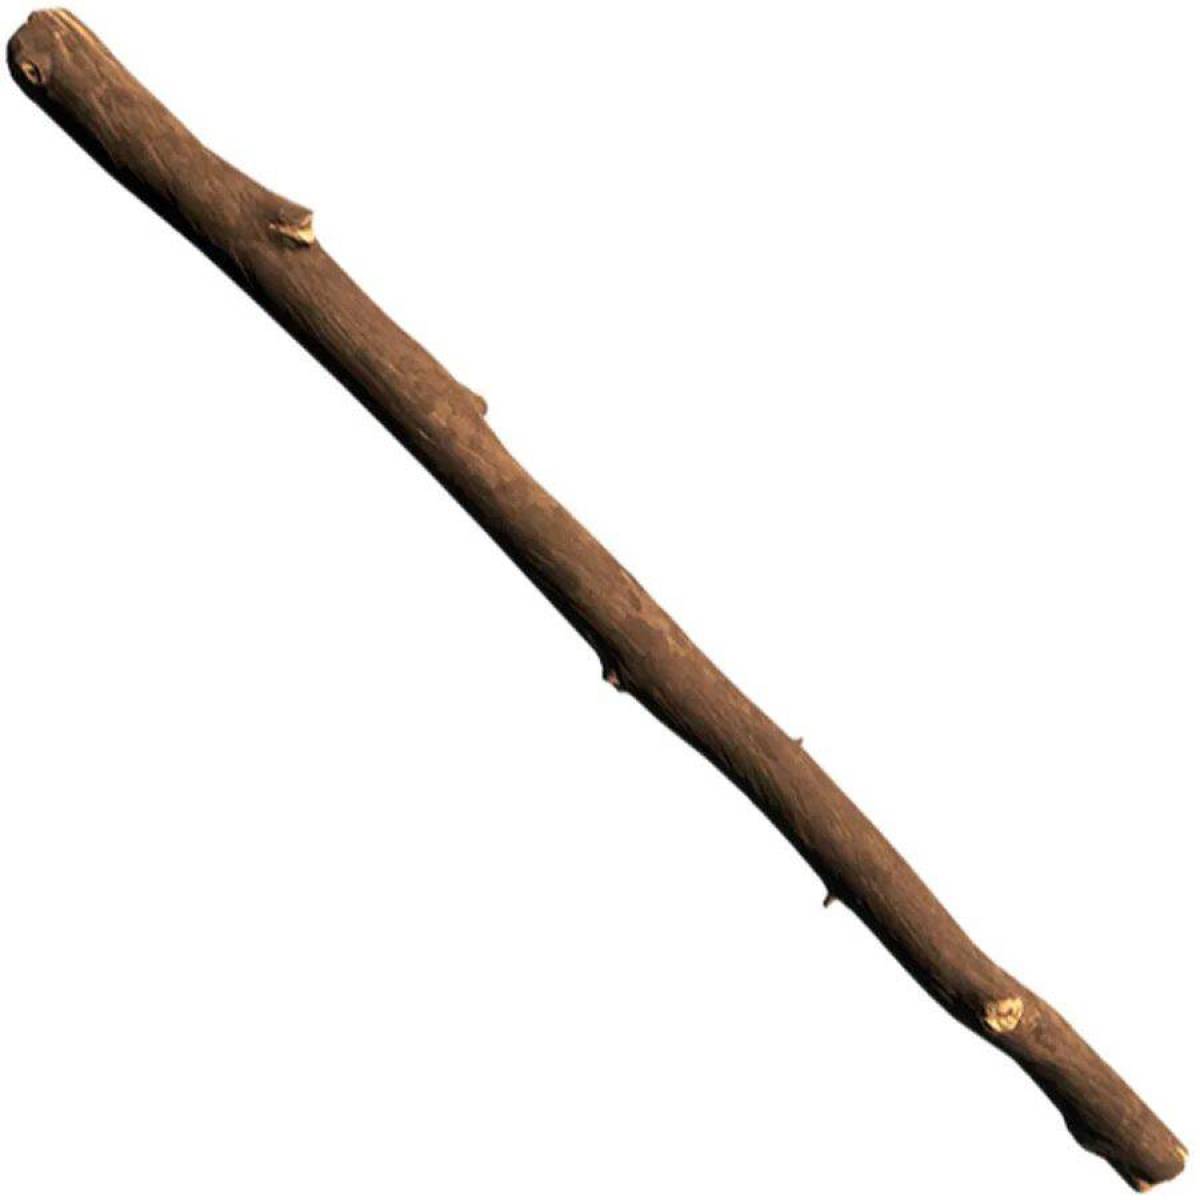 A wooden stick. Палка. Палка деревянная. Деревянная ветка. Дубинка деревянная.